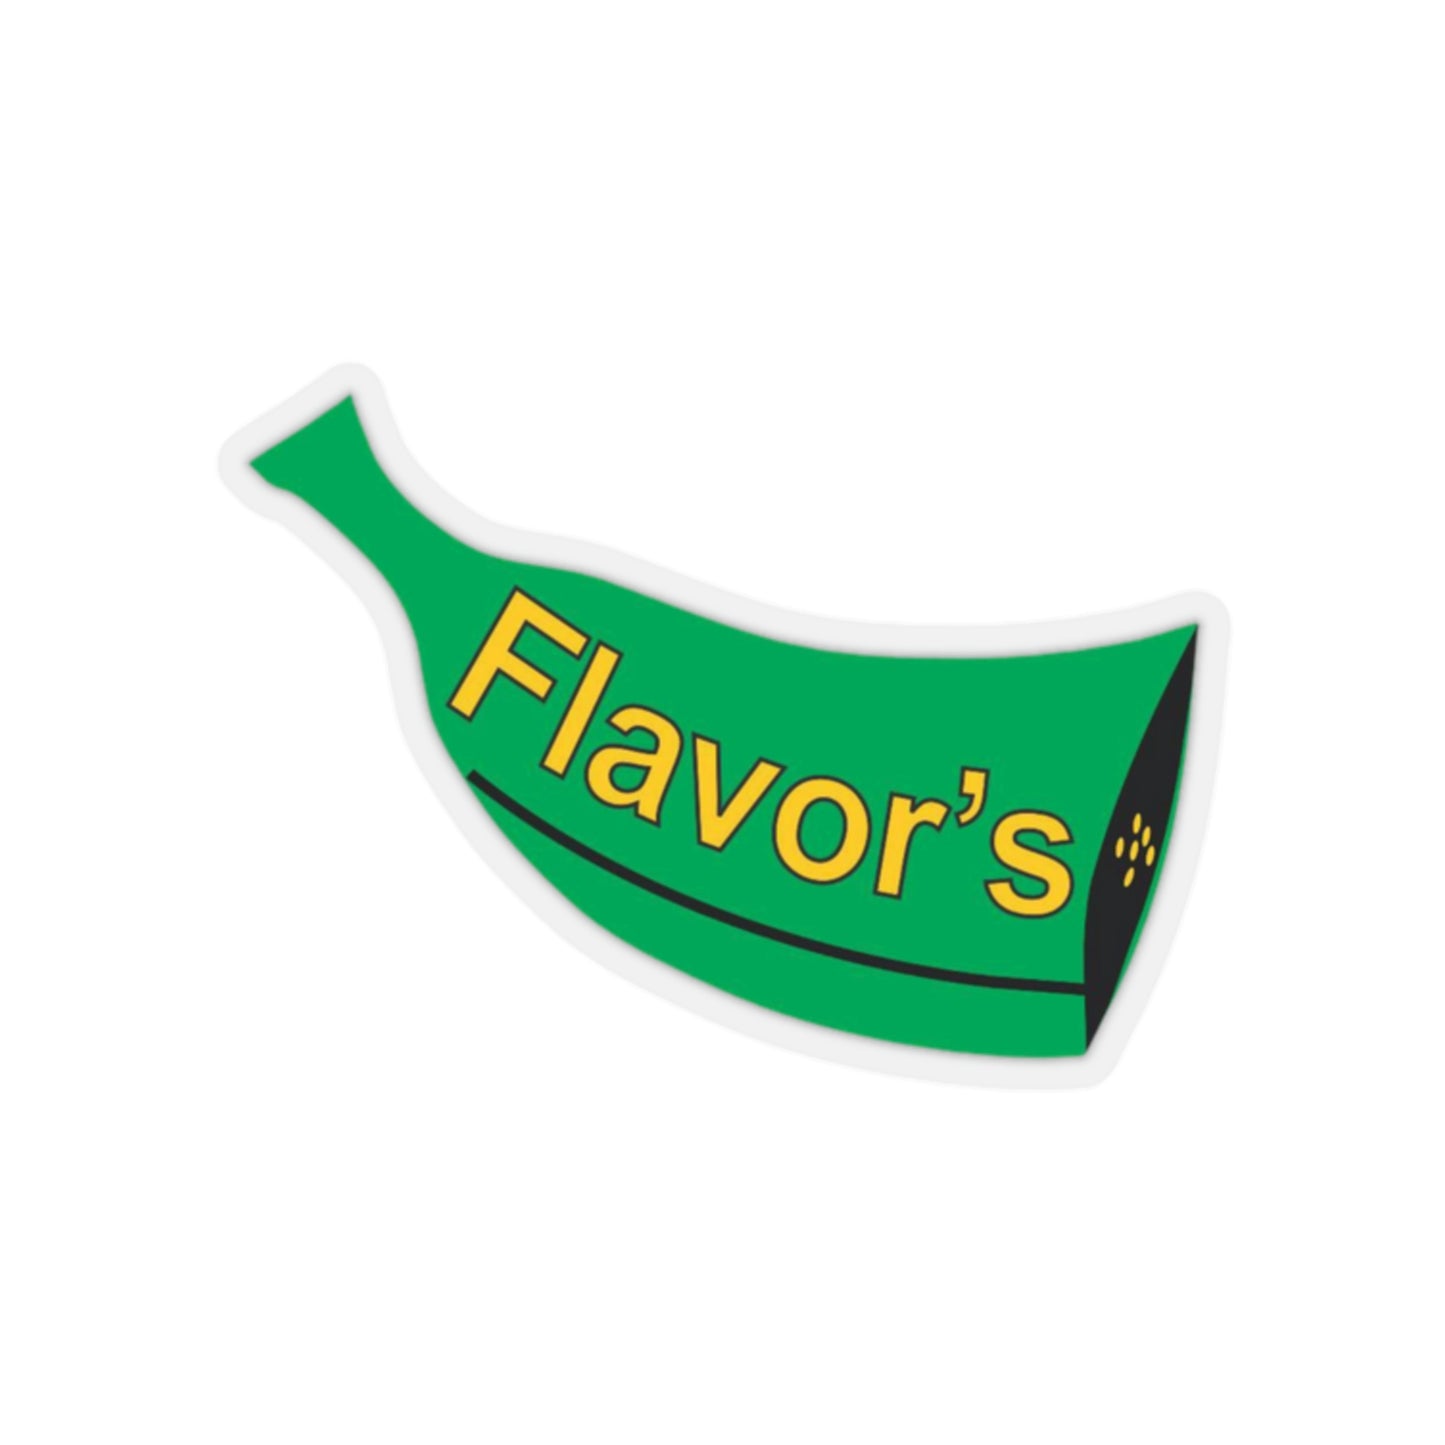 Flavor's Plantain Kiss-Cut Stickers